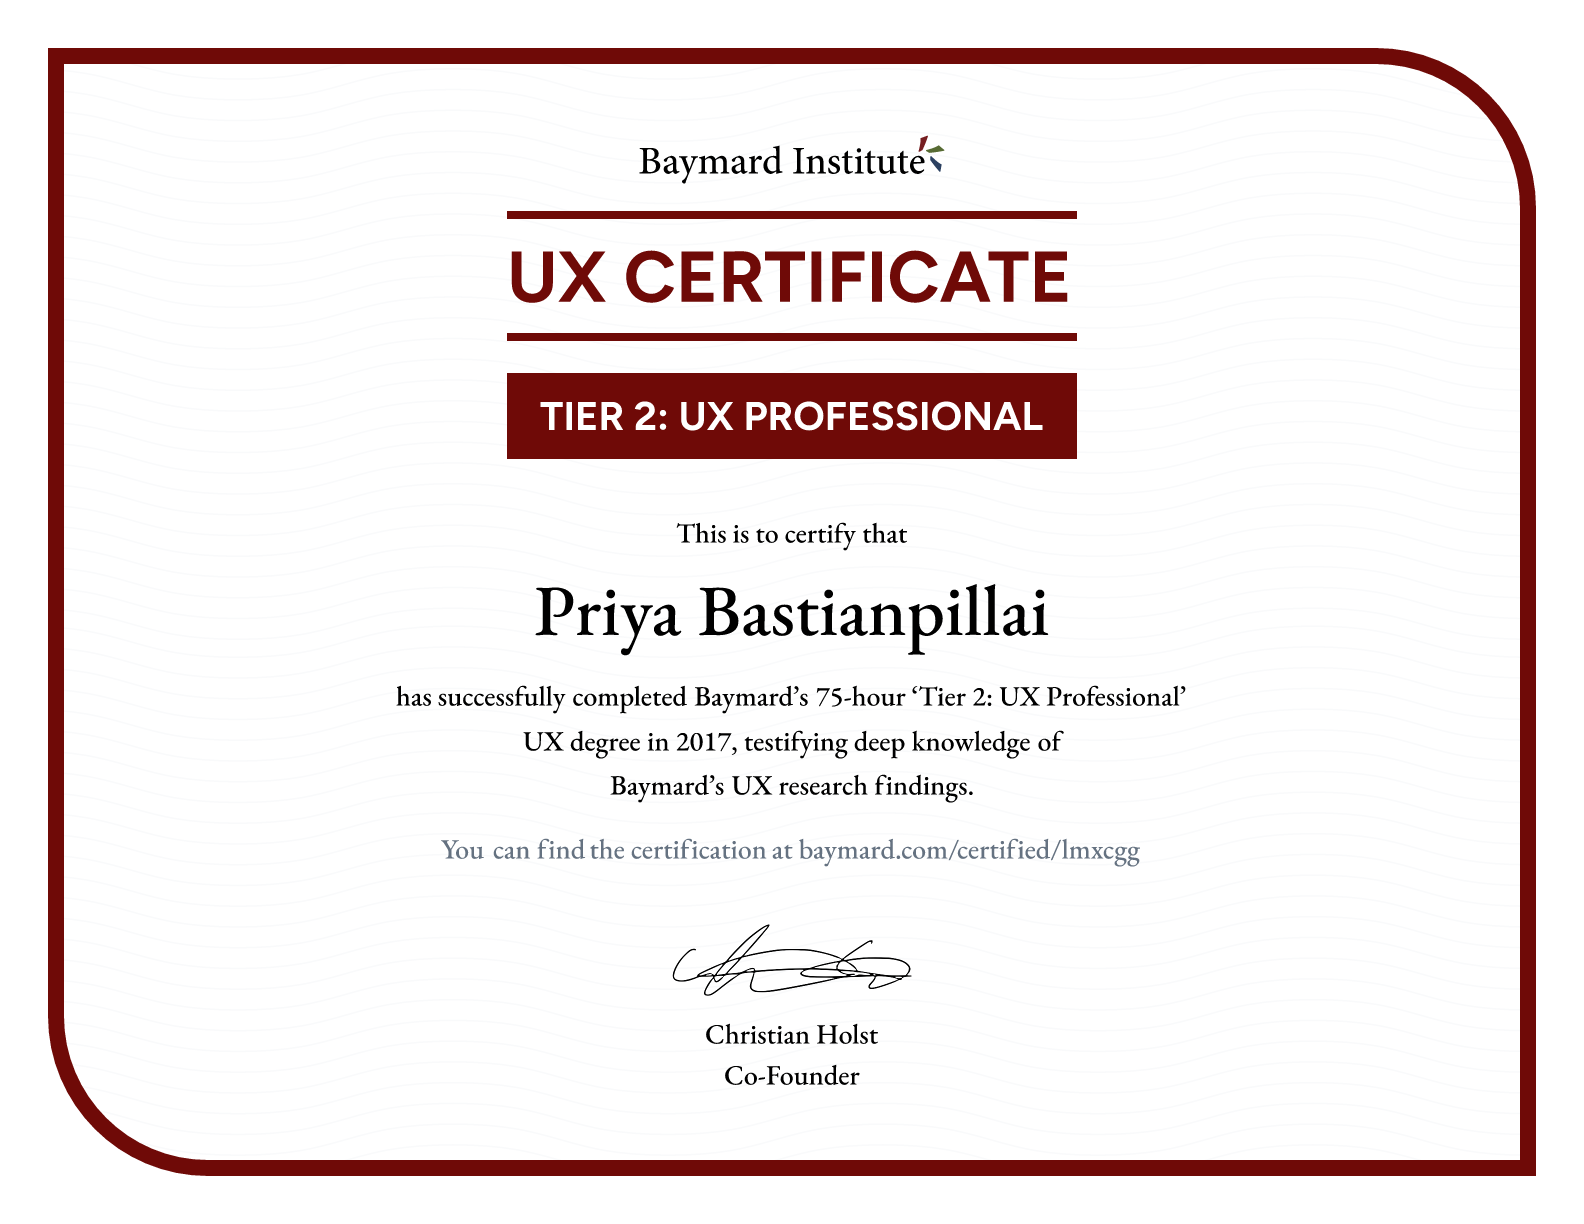 Priya Bastianpillai’s certificate